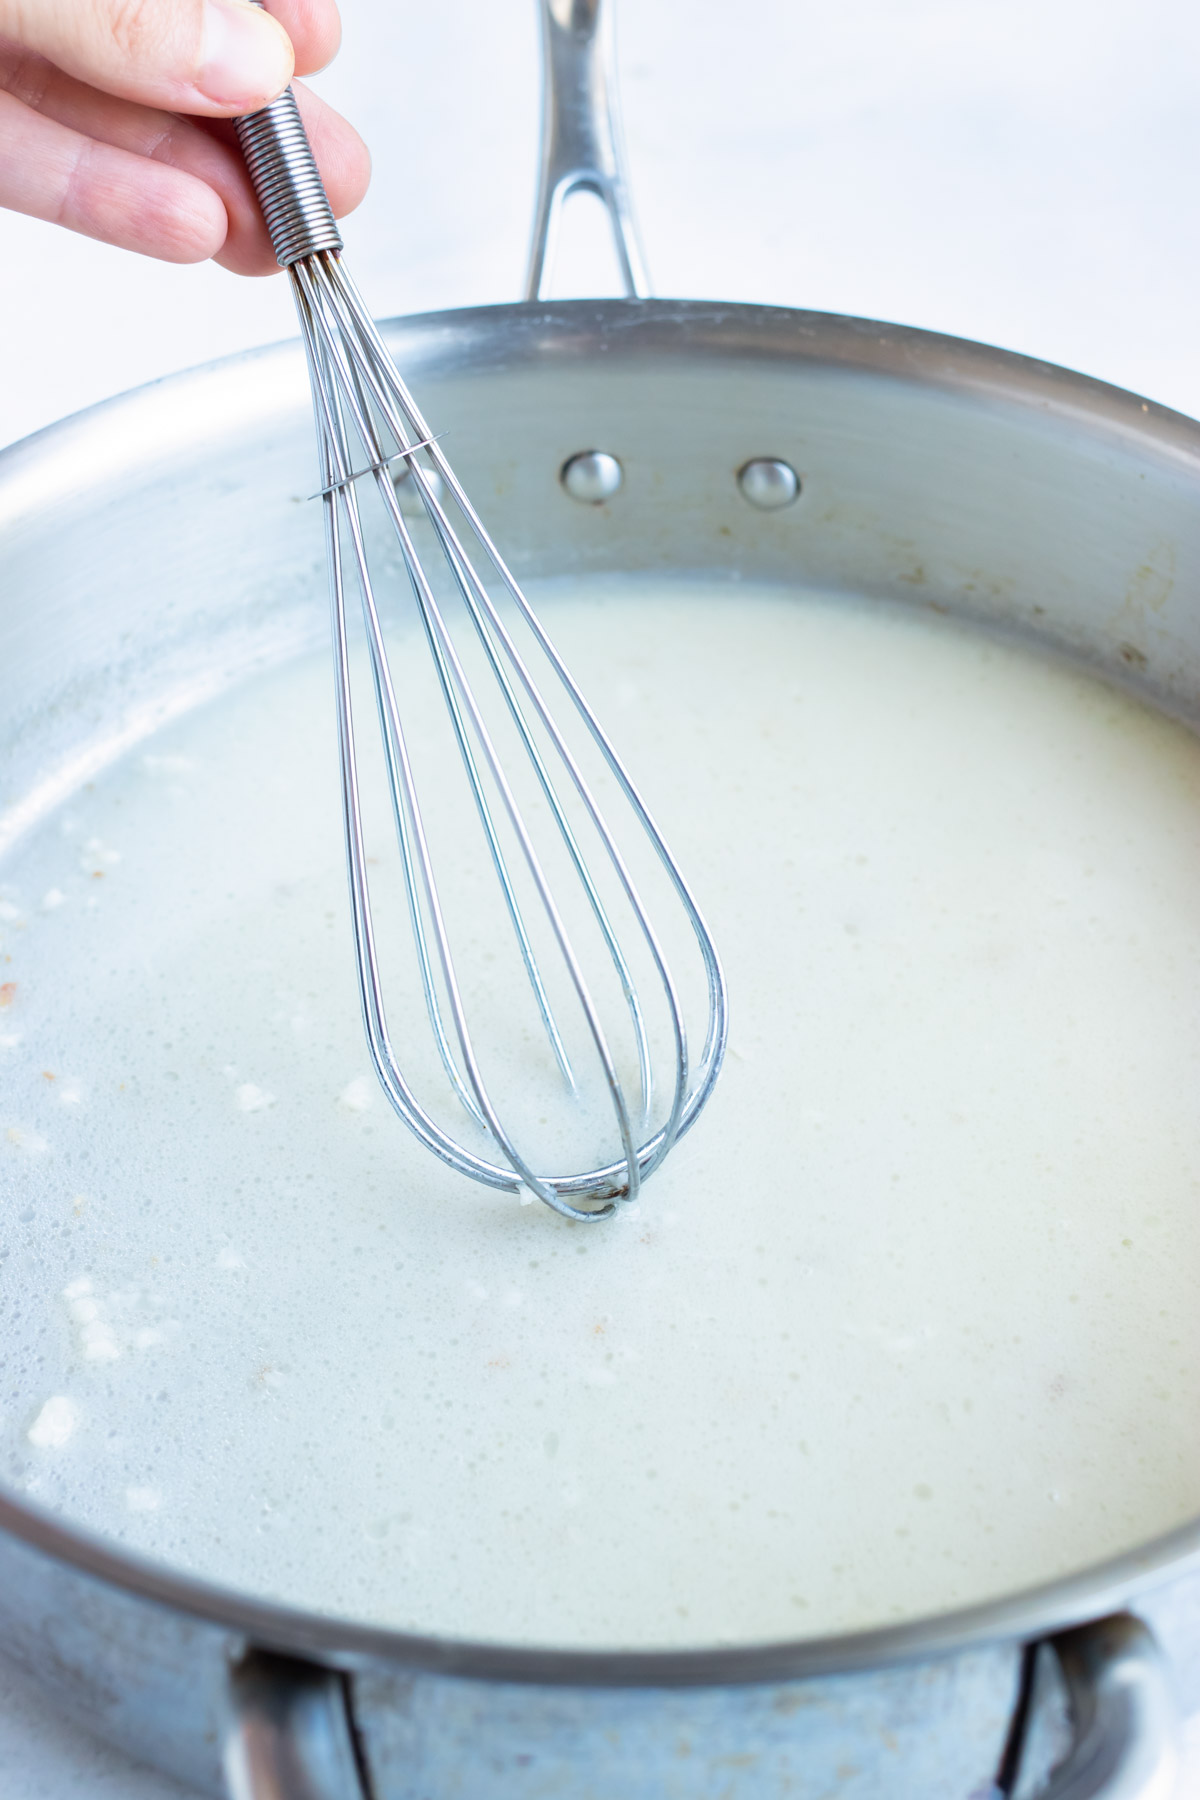 In a skillet, whisk together milk to make healthy carbonara sauce.